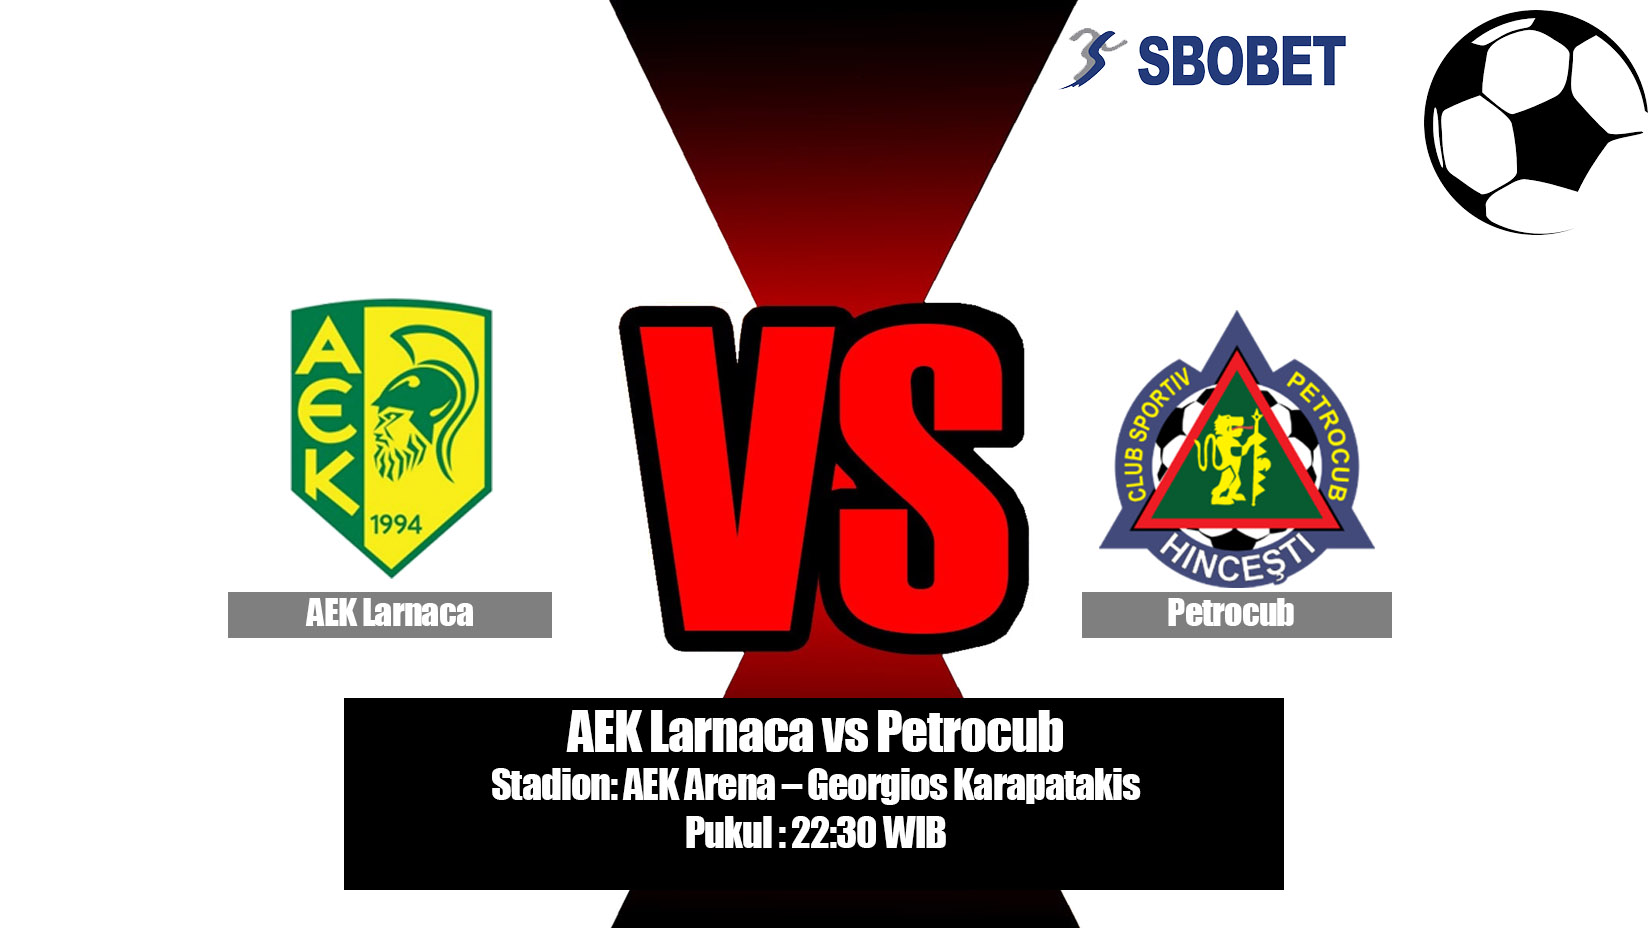 Prediksi Bola AEK Larnaca vs Petrocub 11 Juli 2019.jpg